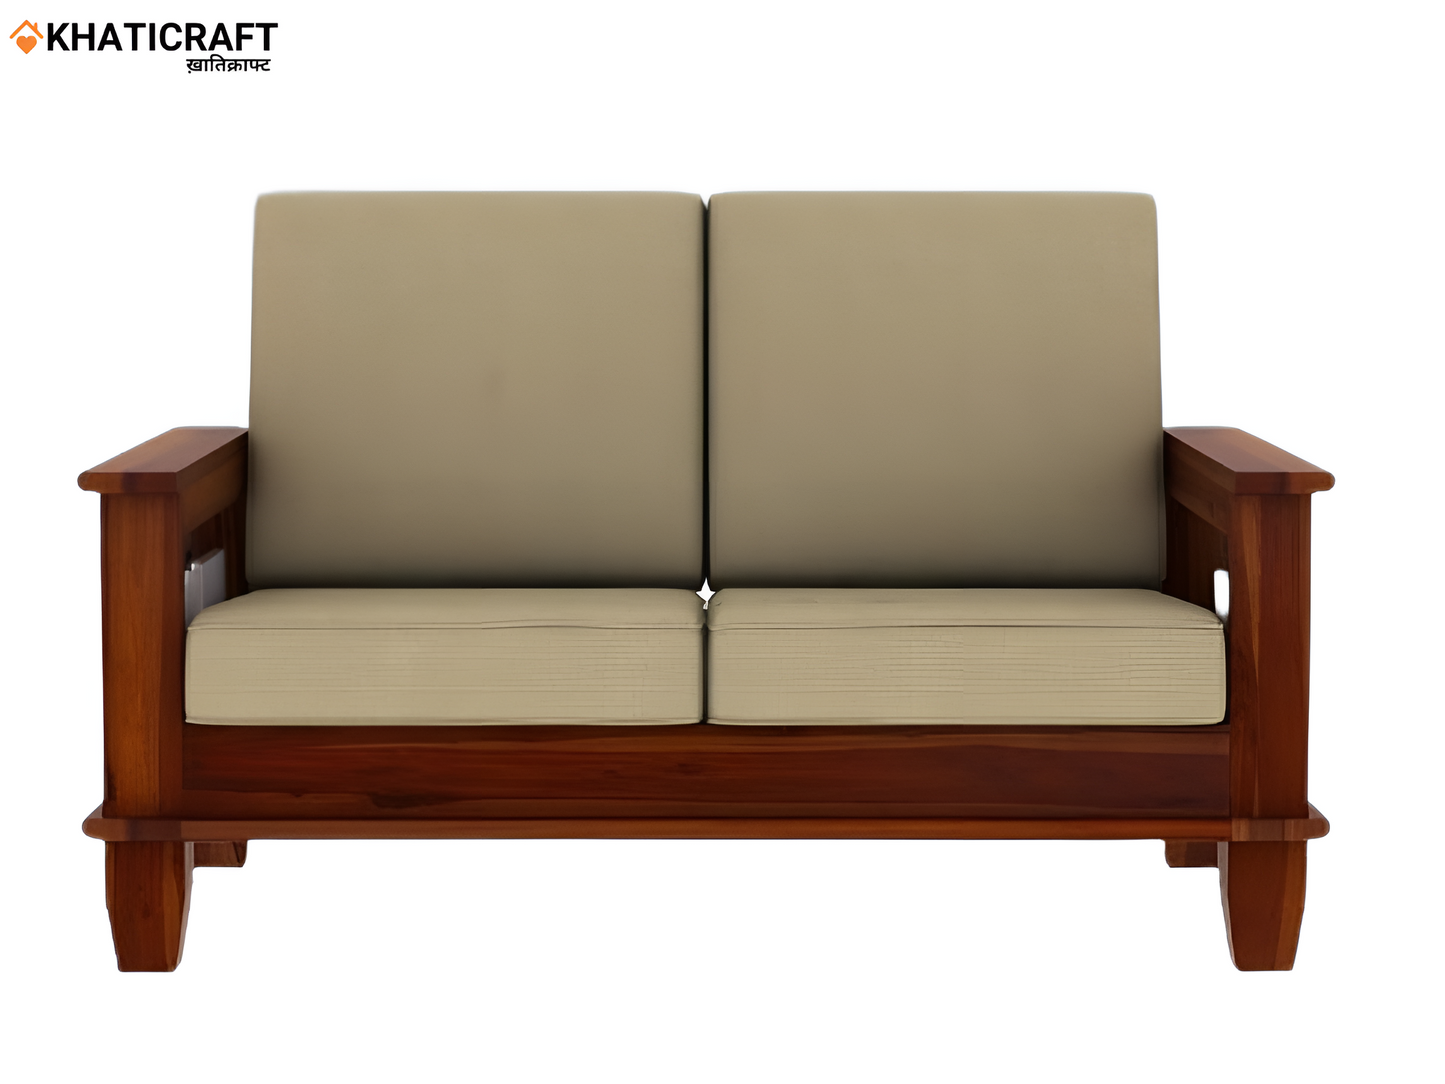 Hansa Solid Wood Sheesham 5 Seater Sofa